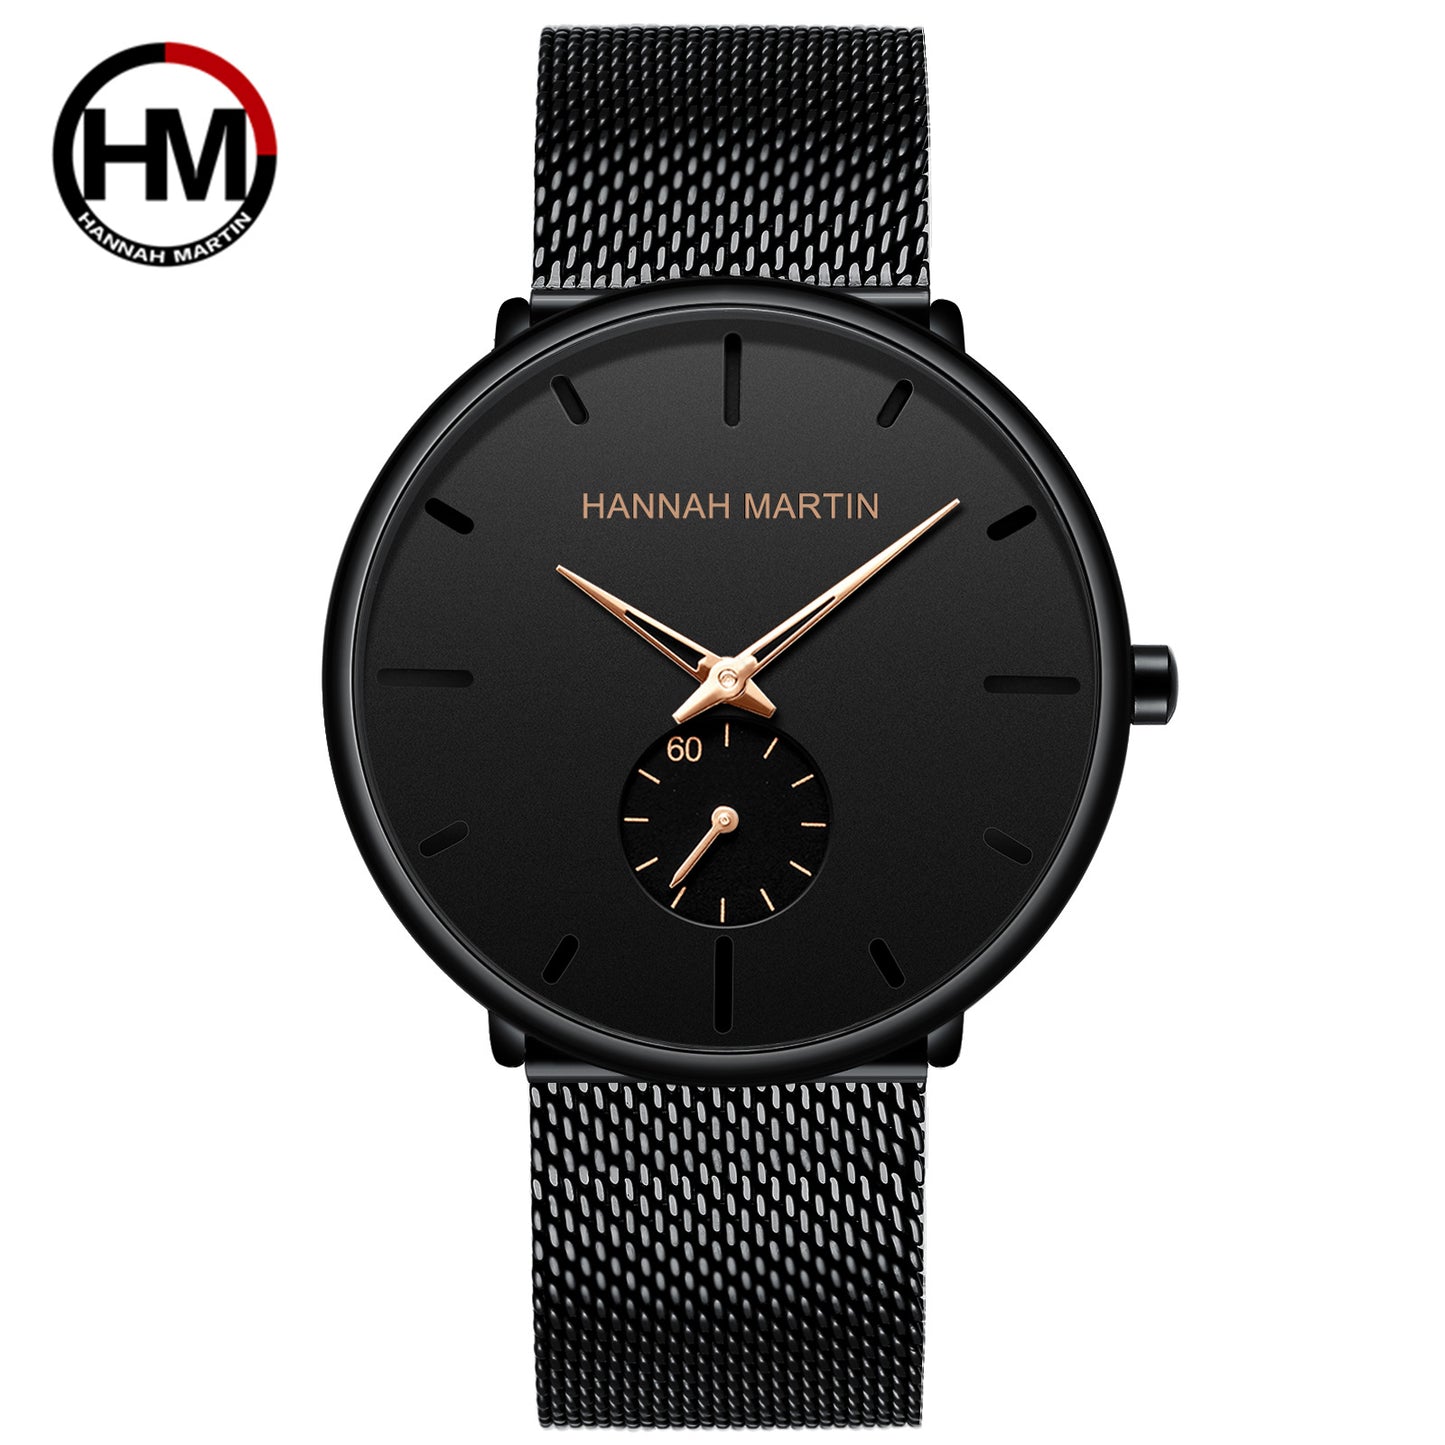 Watches Amazon explosion black waterproof watch Hot personality fashion popular student men's quartz watch